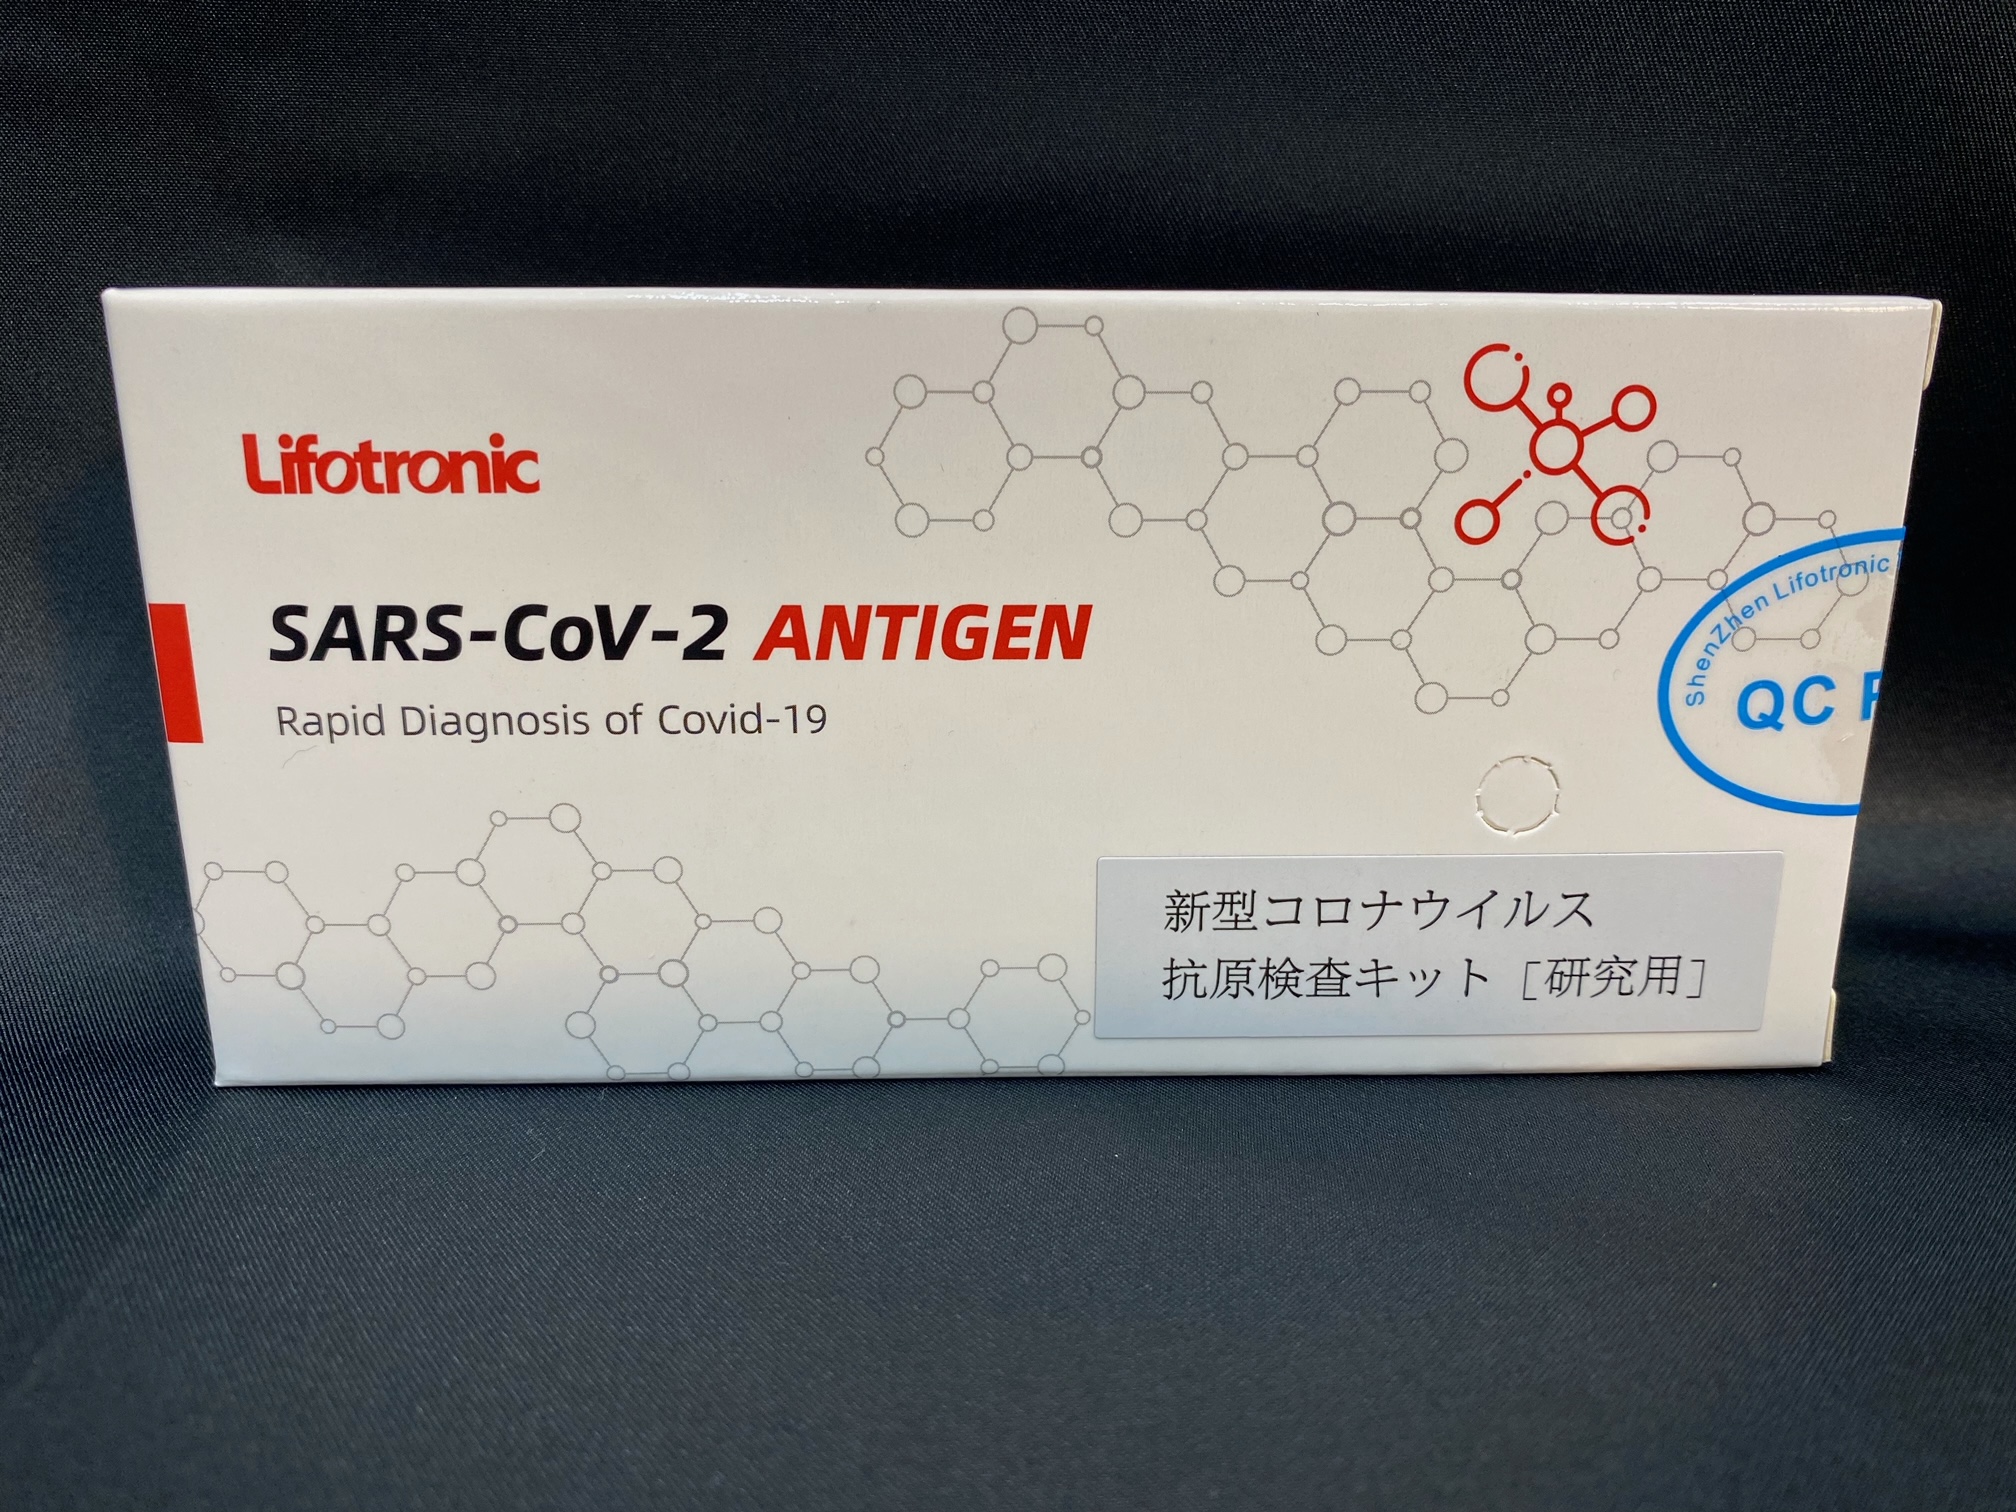 SARS-CoV-2 Antigen(GICAイムノクロマト法) 新型コロナウイルス抗原検査キット【研究用】1箱25個入